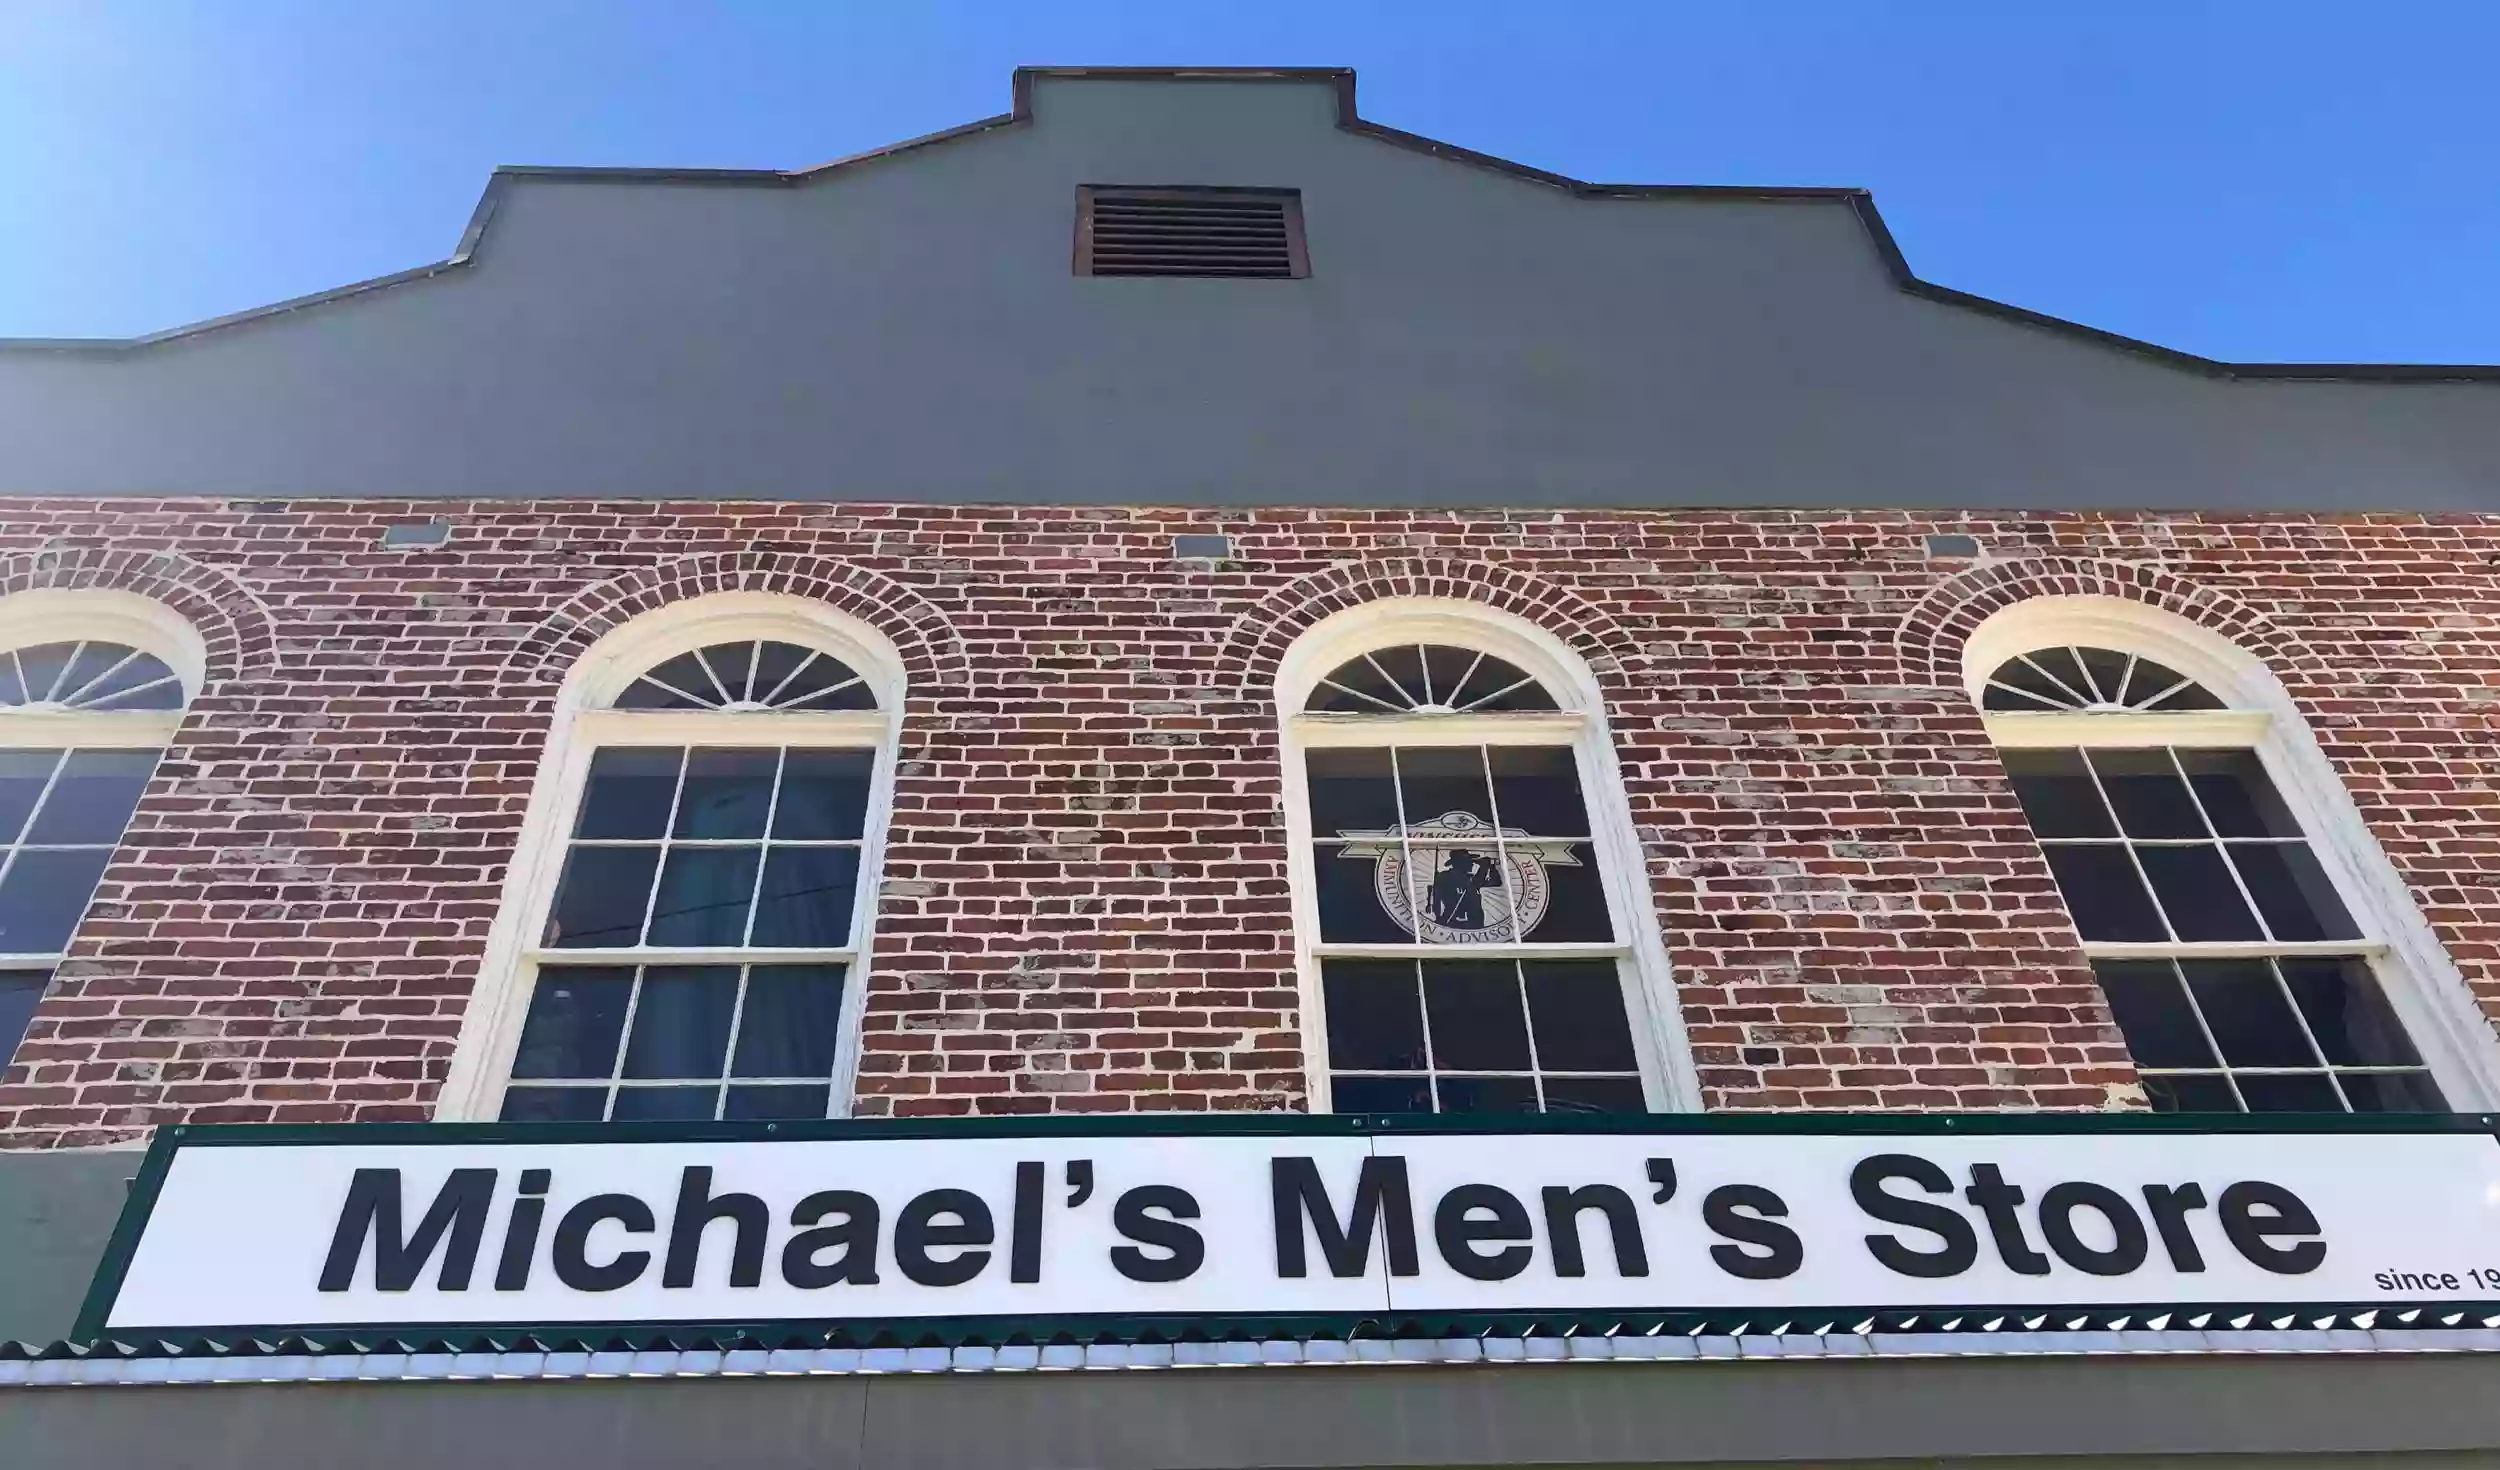 Michael's Men's Store